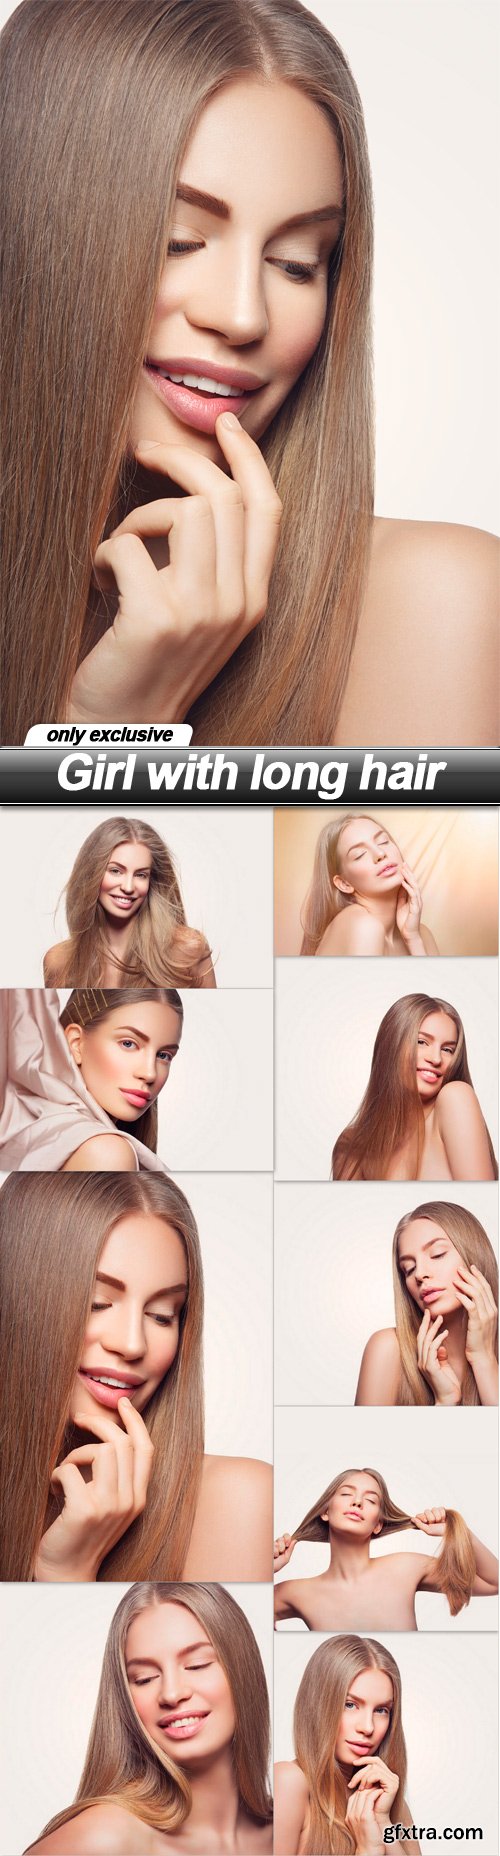 Girl with long hair - 9 UHQ JPEG